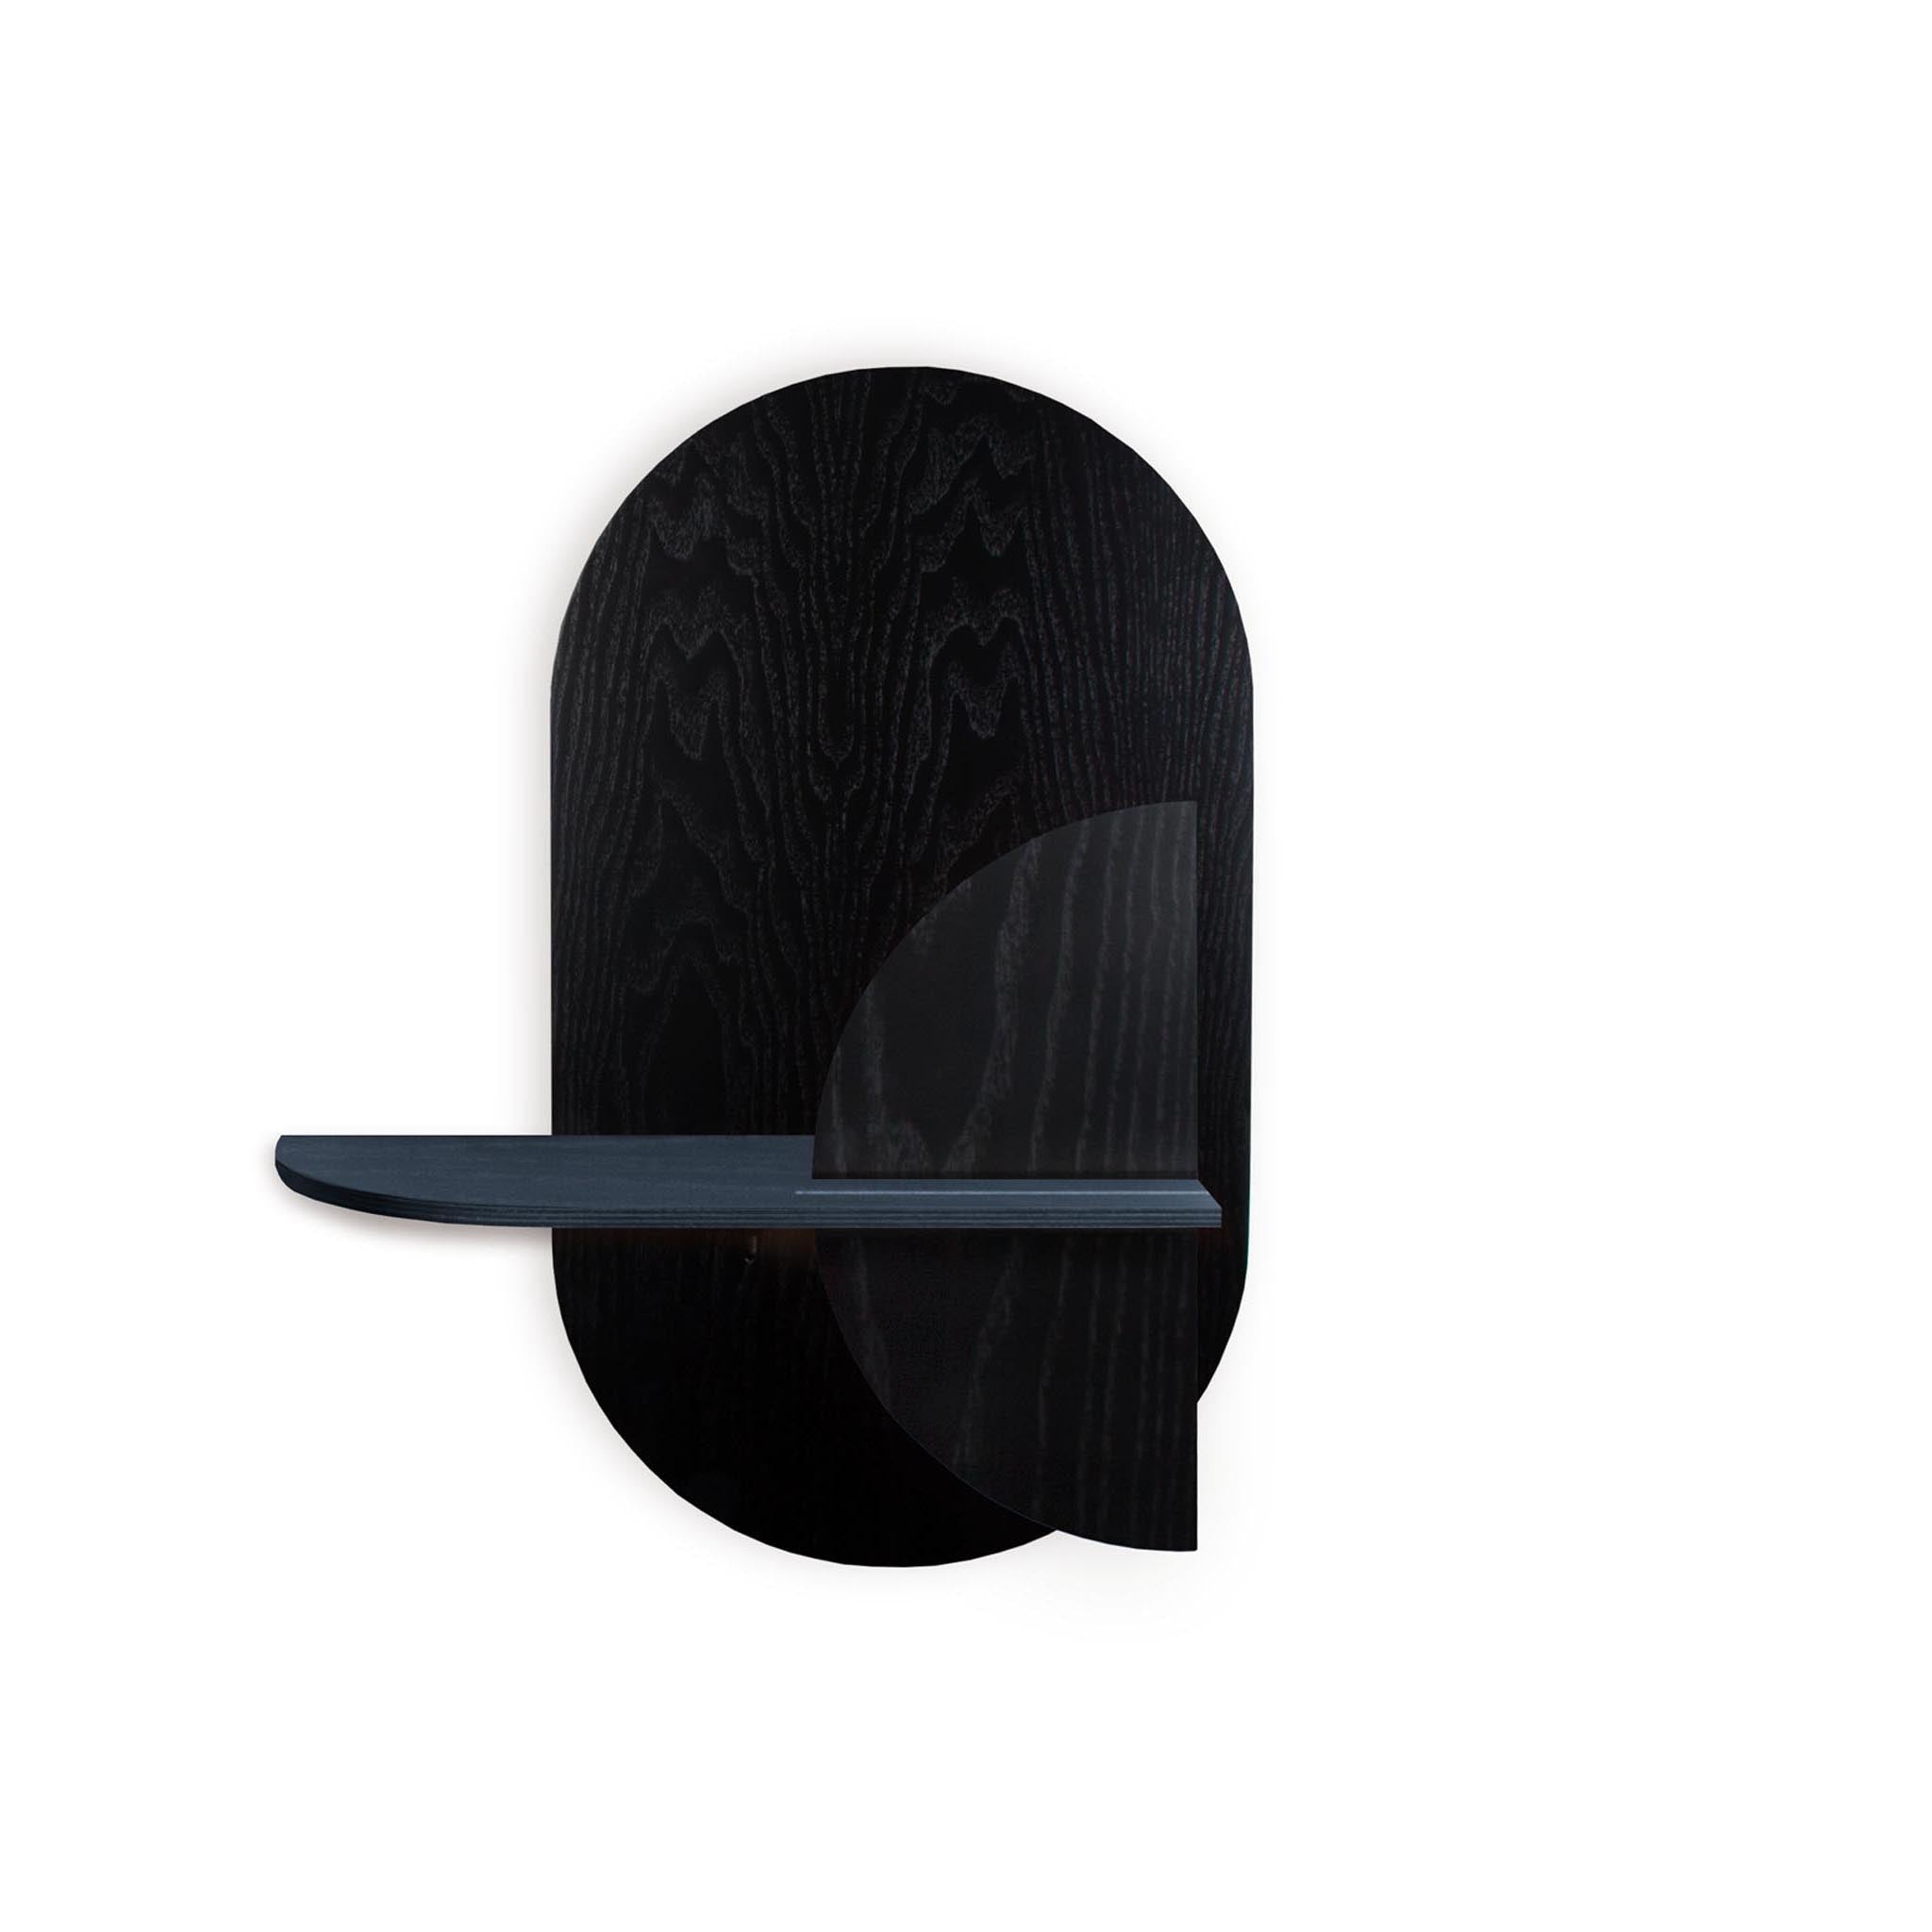 Alba wall shelf · Black oval